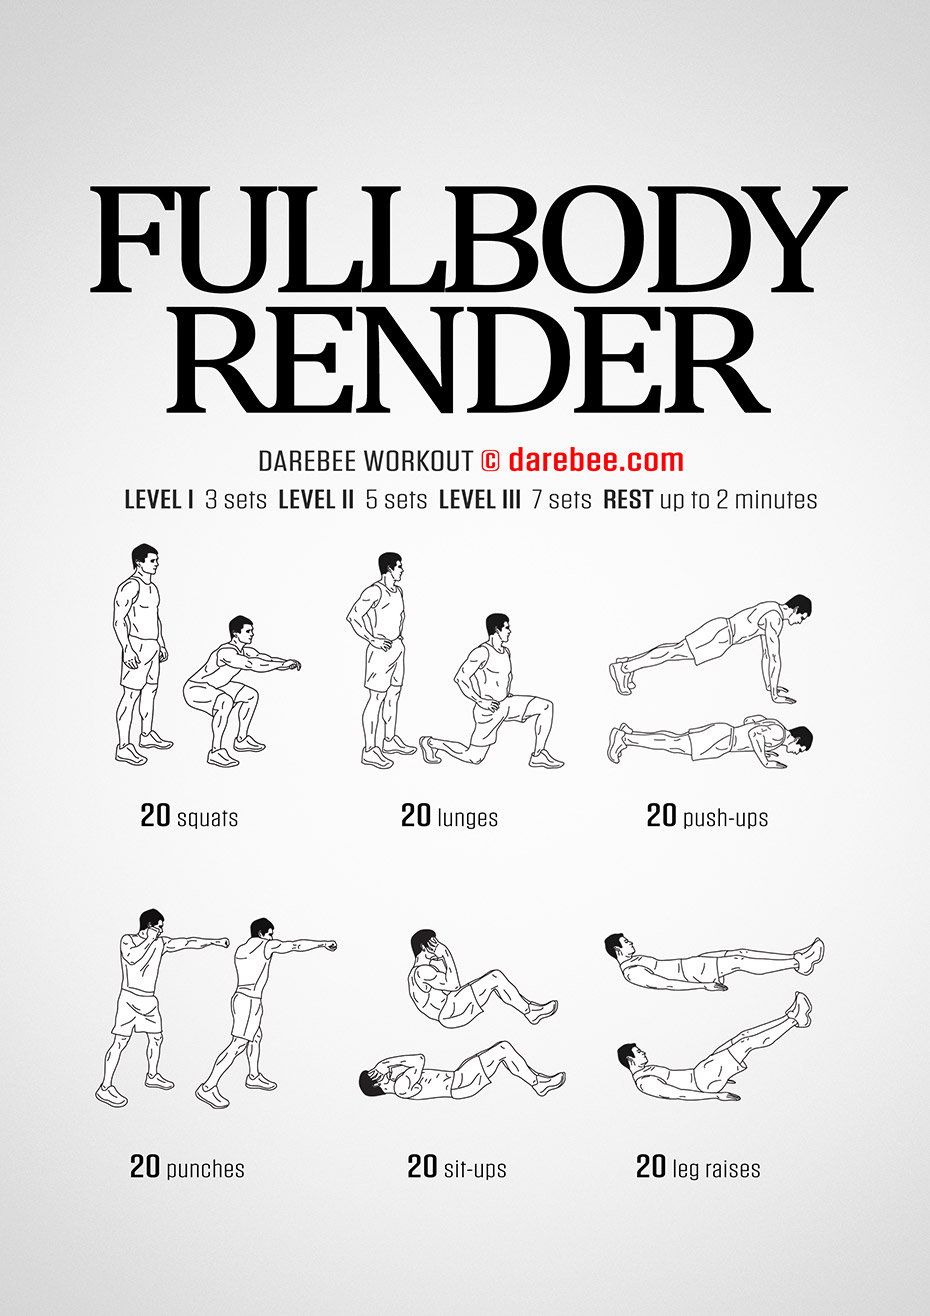 Fullbody Render Workout